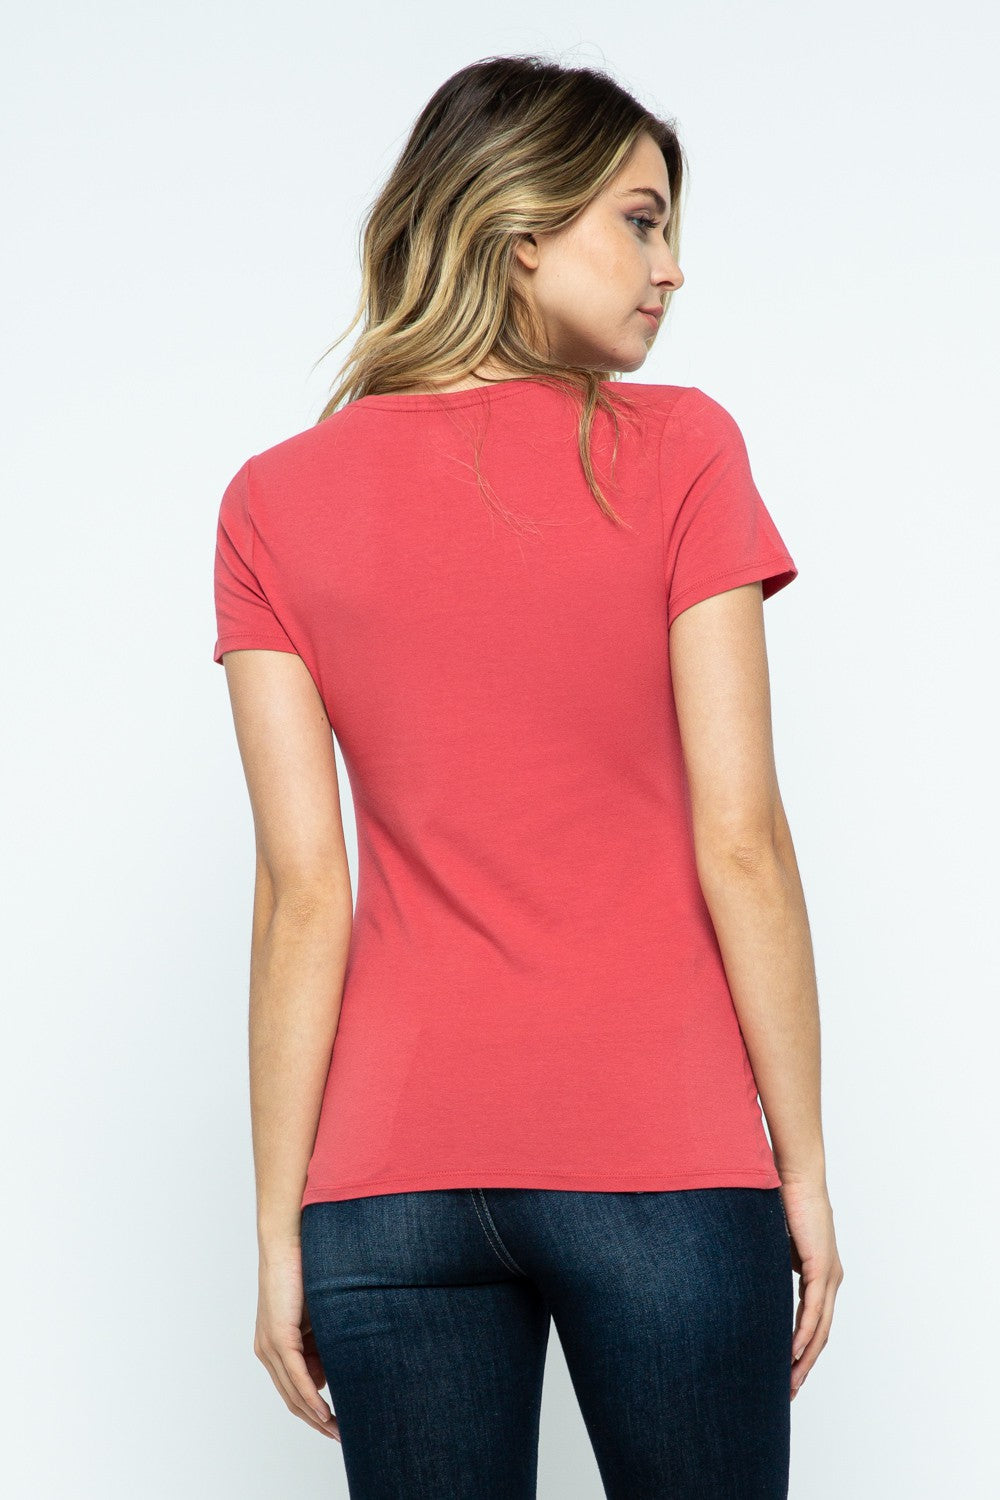 Not so Basic - Crew & V neck Essential T Shirt by Cielio